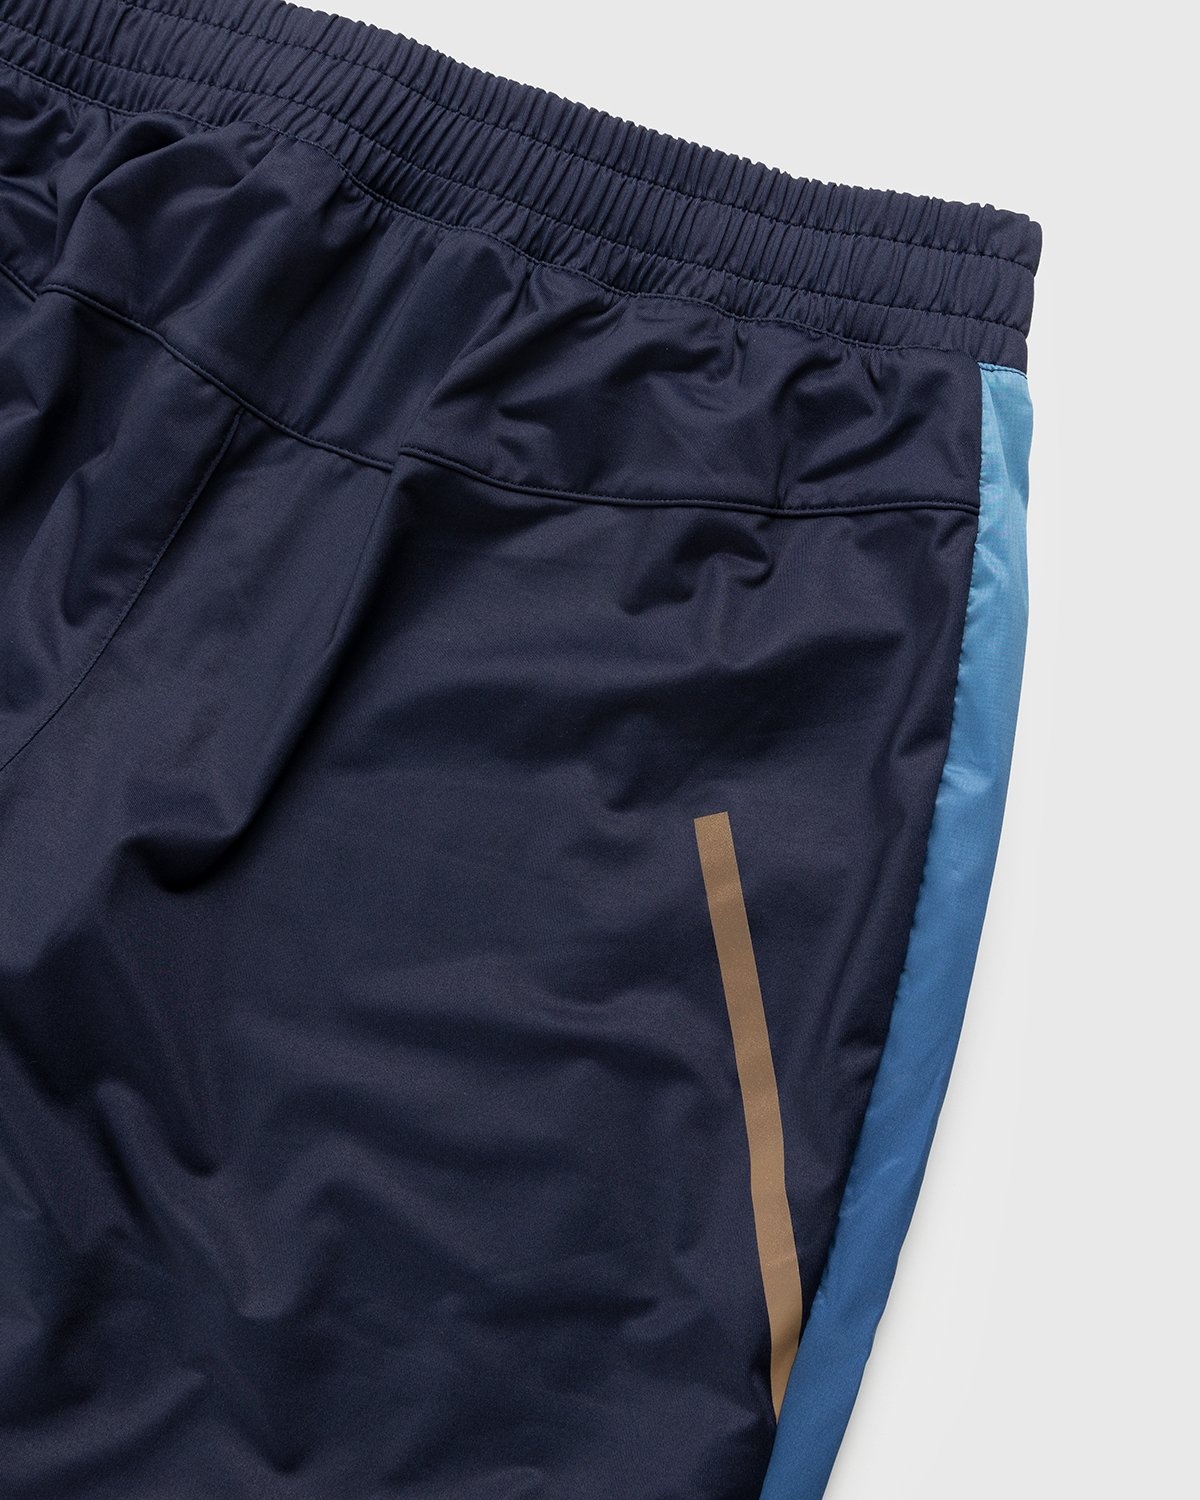 Loewe x On – Women's Technical Running Pants Gradient Blue - Active Pants - Blue - Image 4